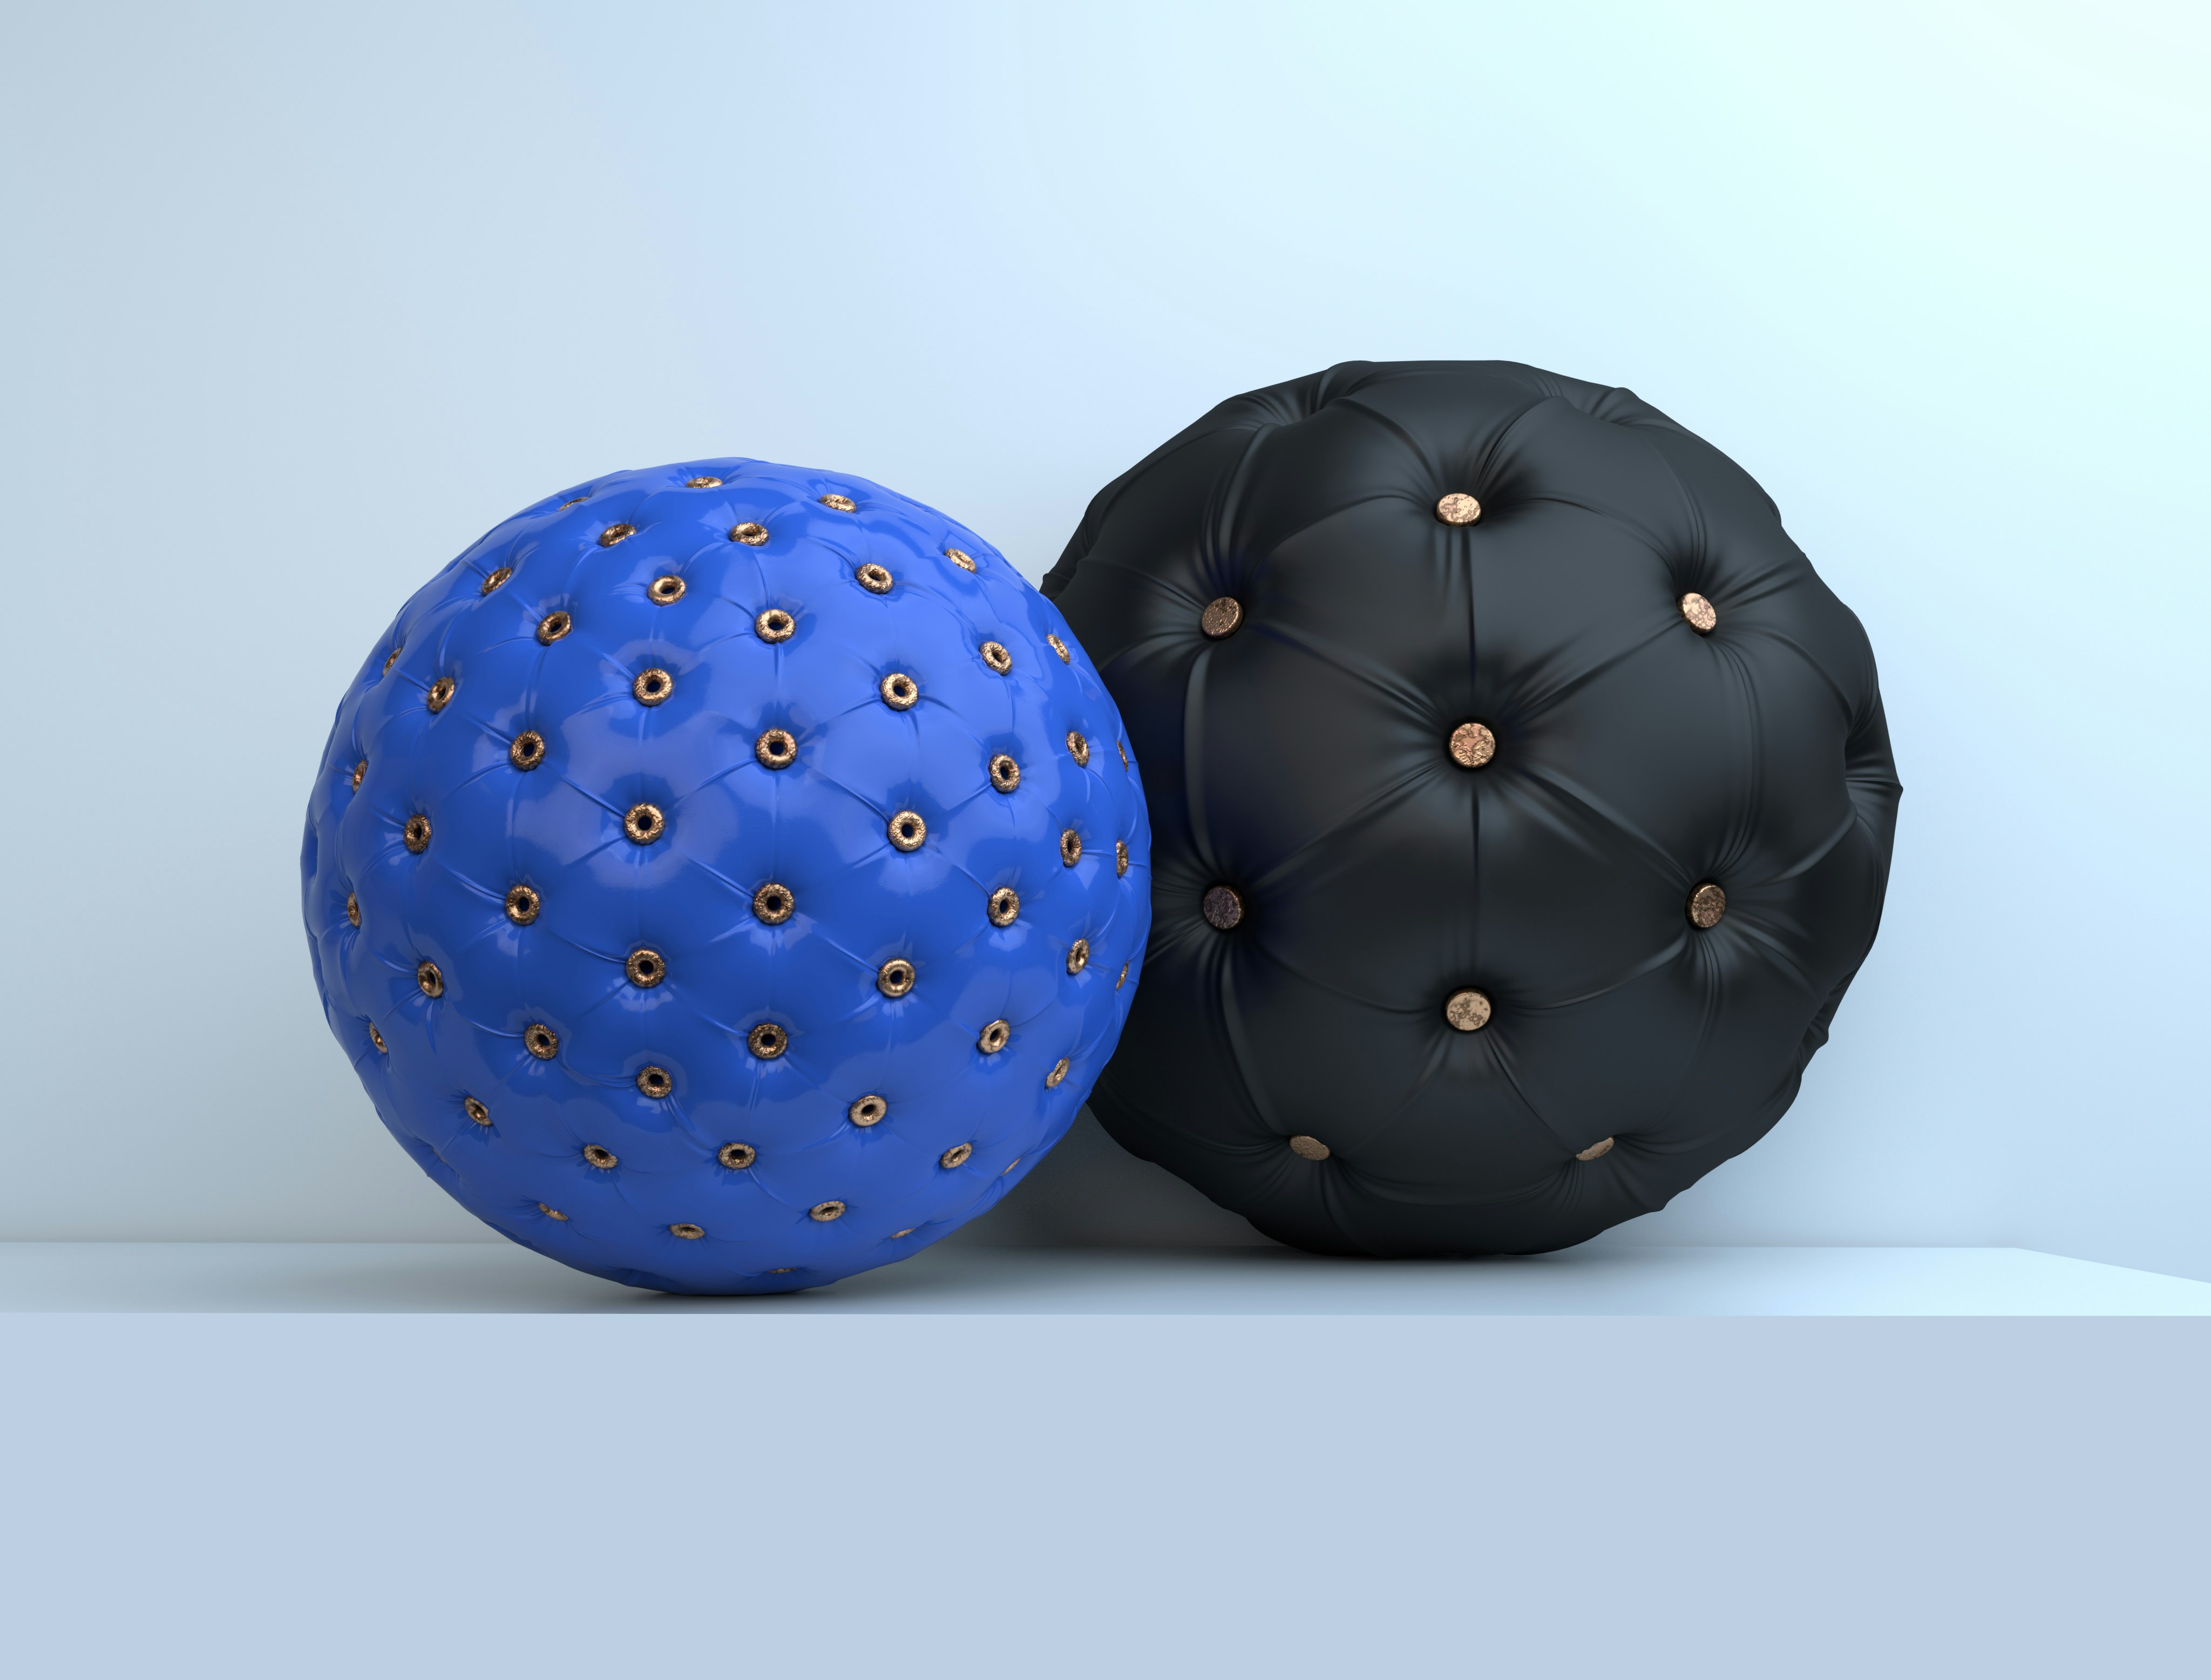 blue and black polka dot ball